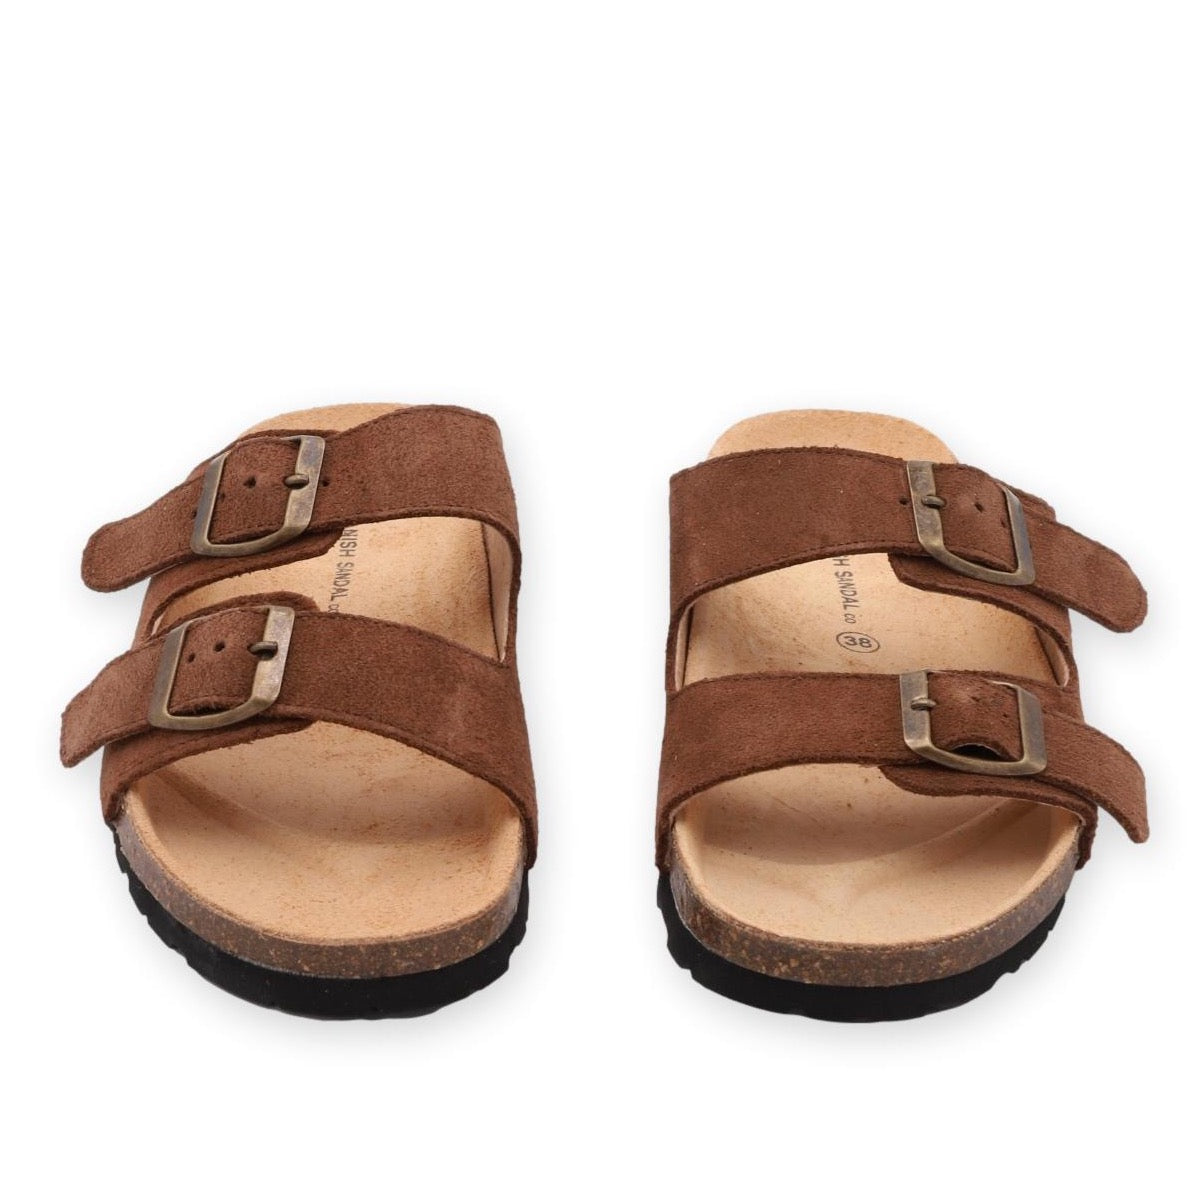 Nordic Chesnut sandals